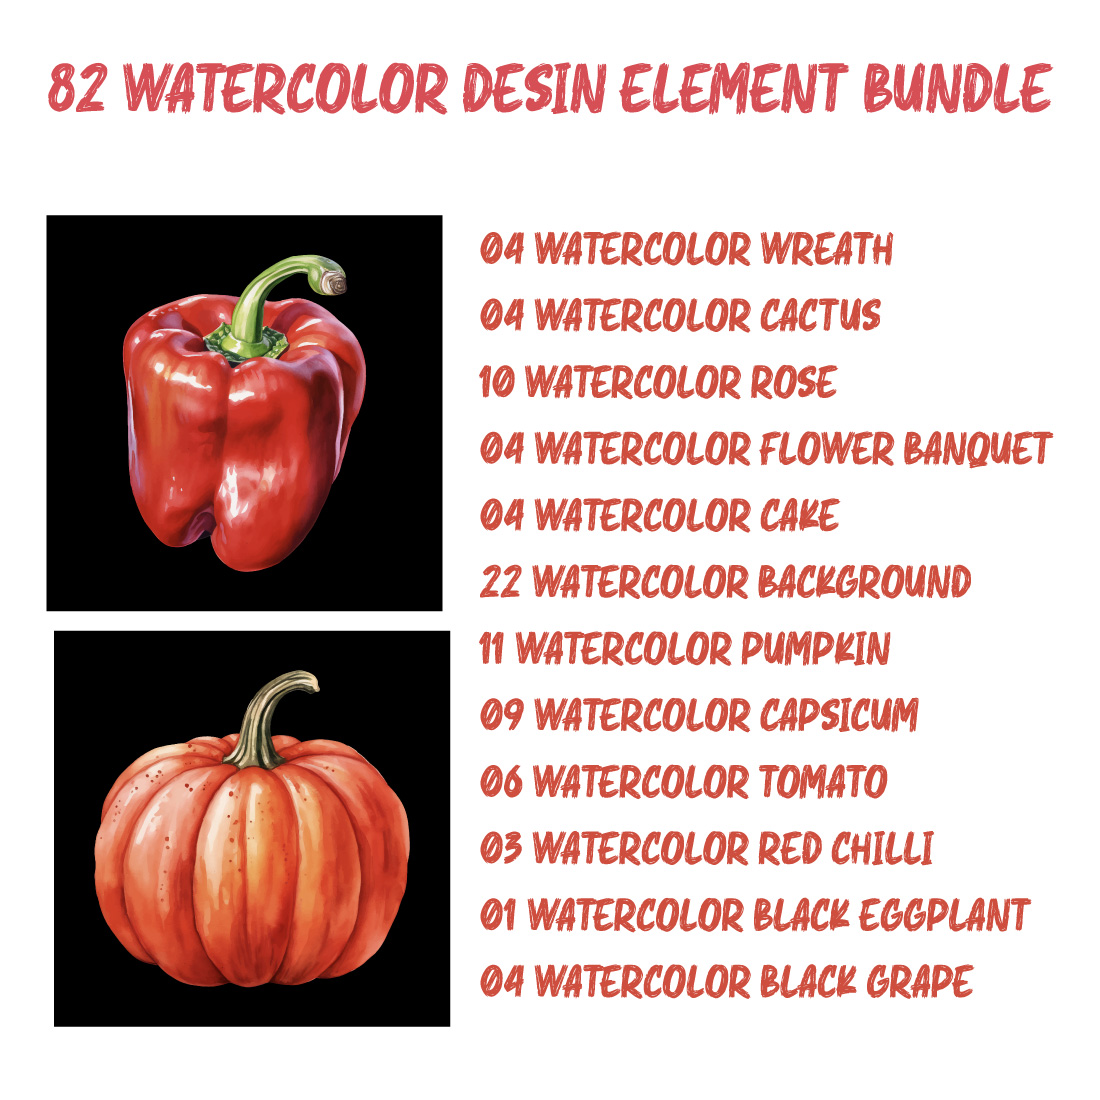 82 Watercolor Design Bundle preview image.